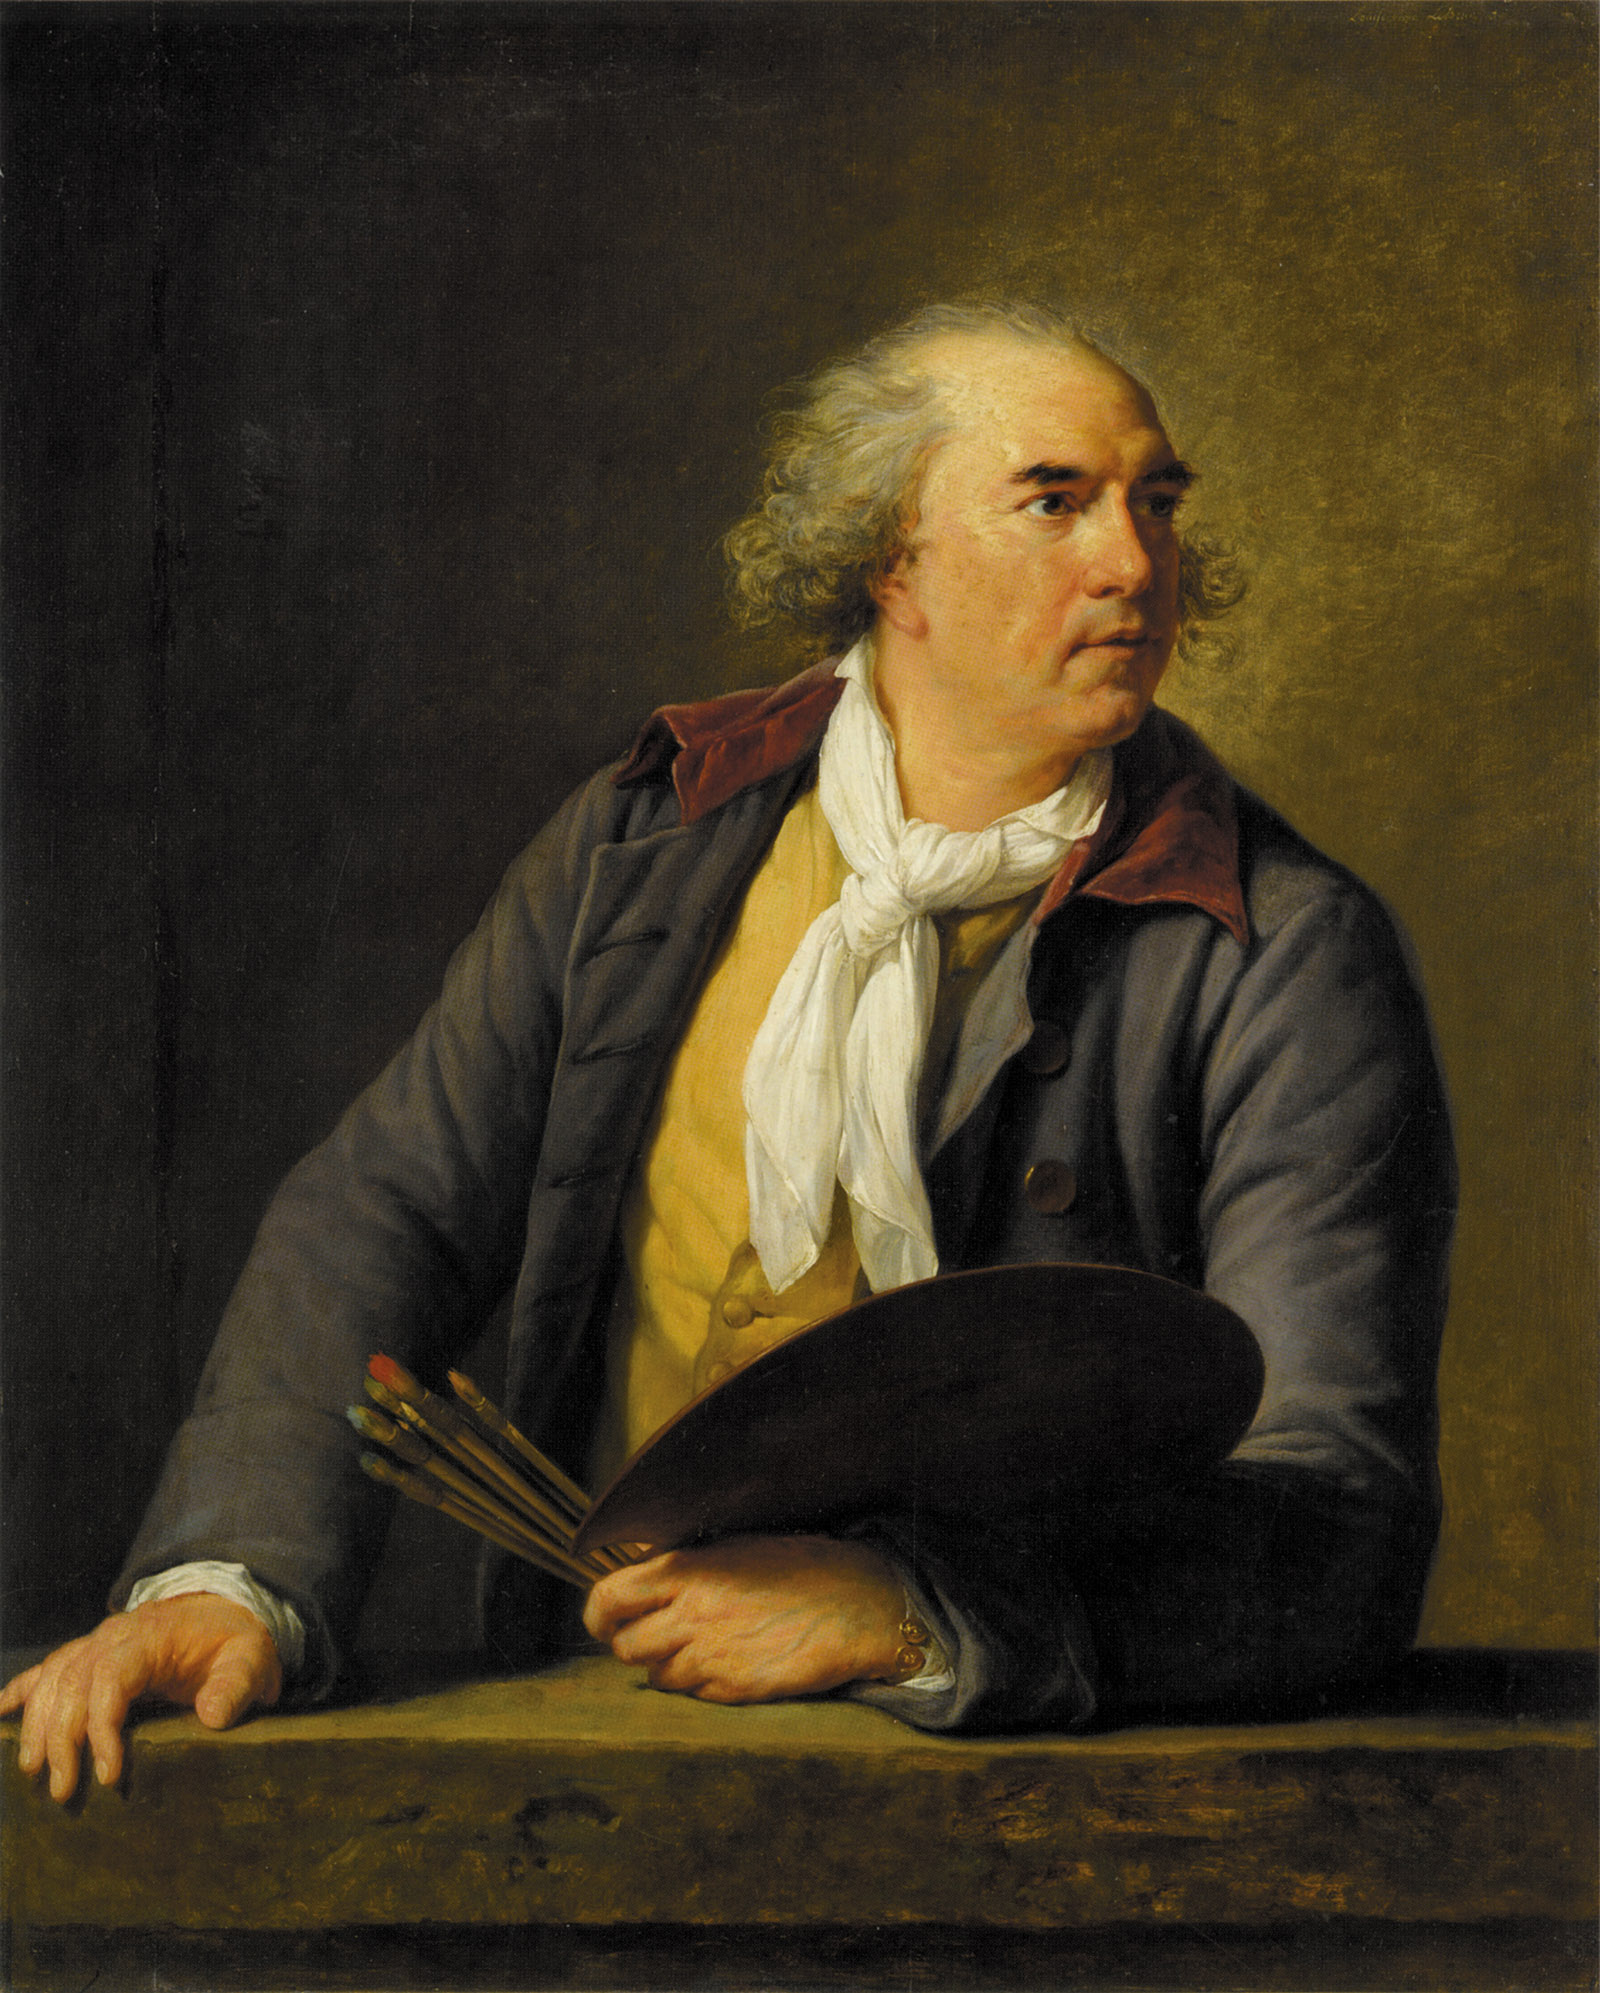 Hubert Robert; painting by Élisabeth Louise Vigée Le Brun, 1788